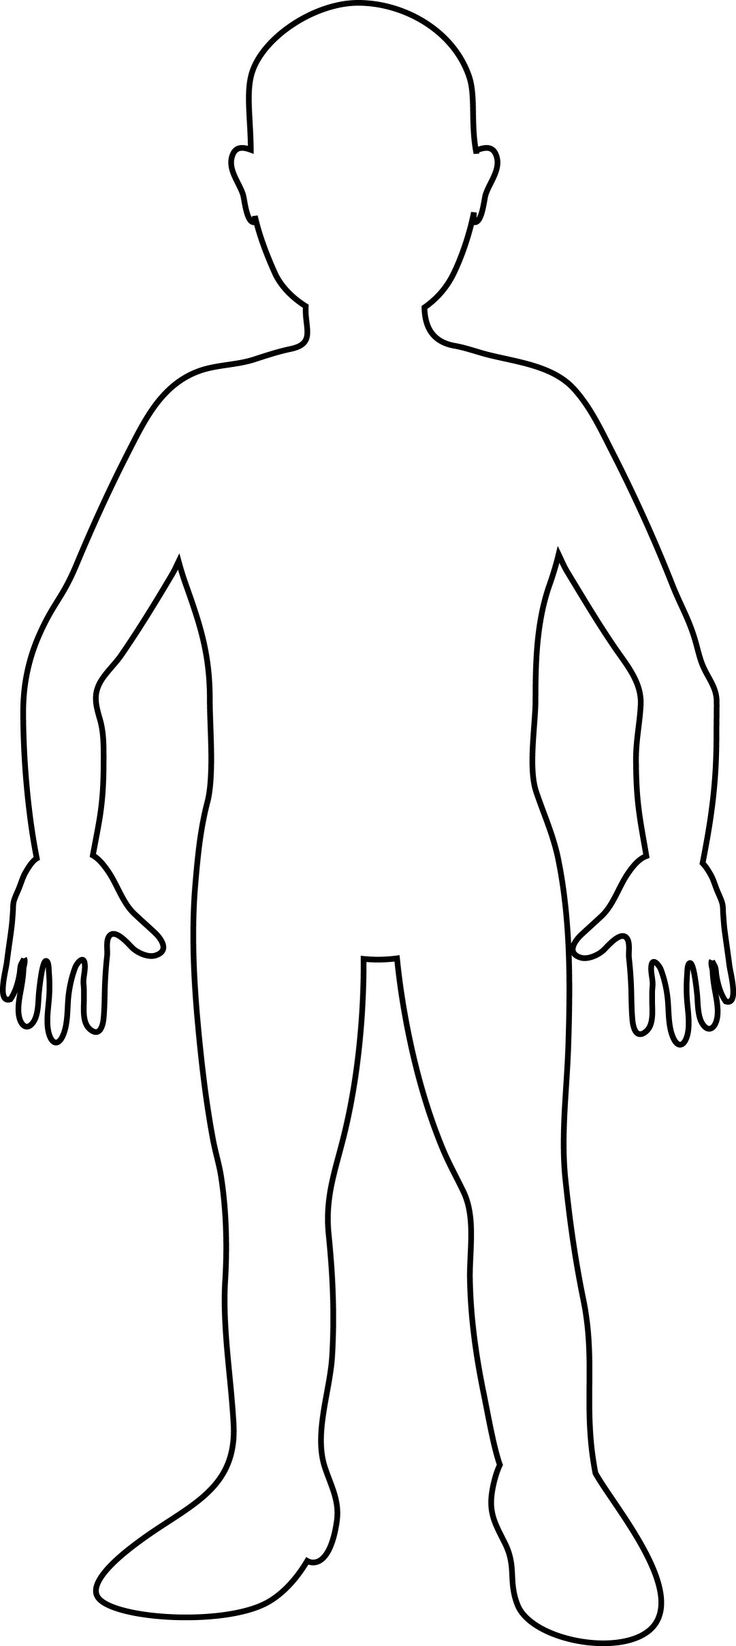 Cartoon Blank Body Template Stock Vector - Illustration of full